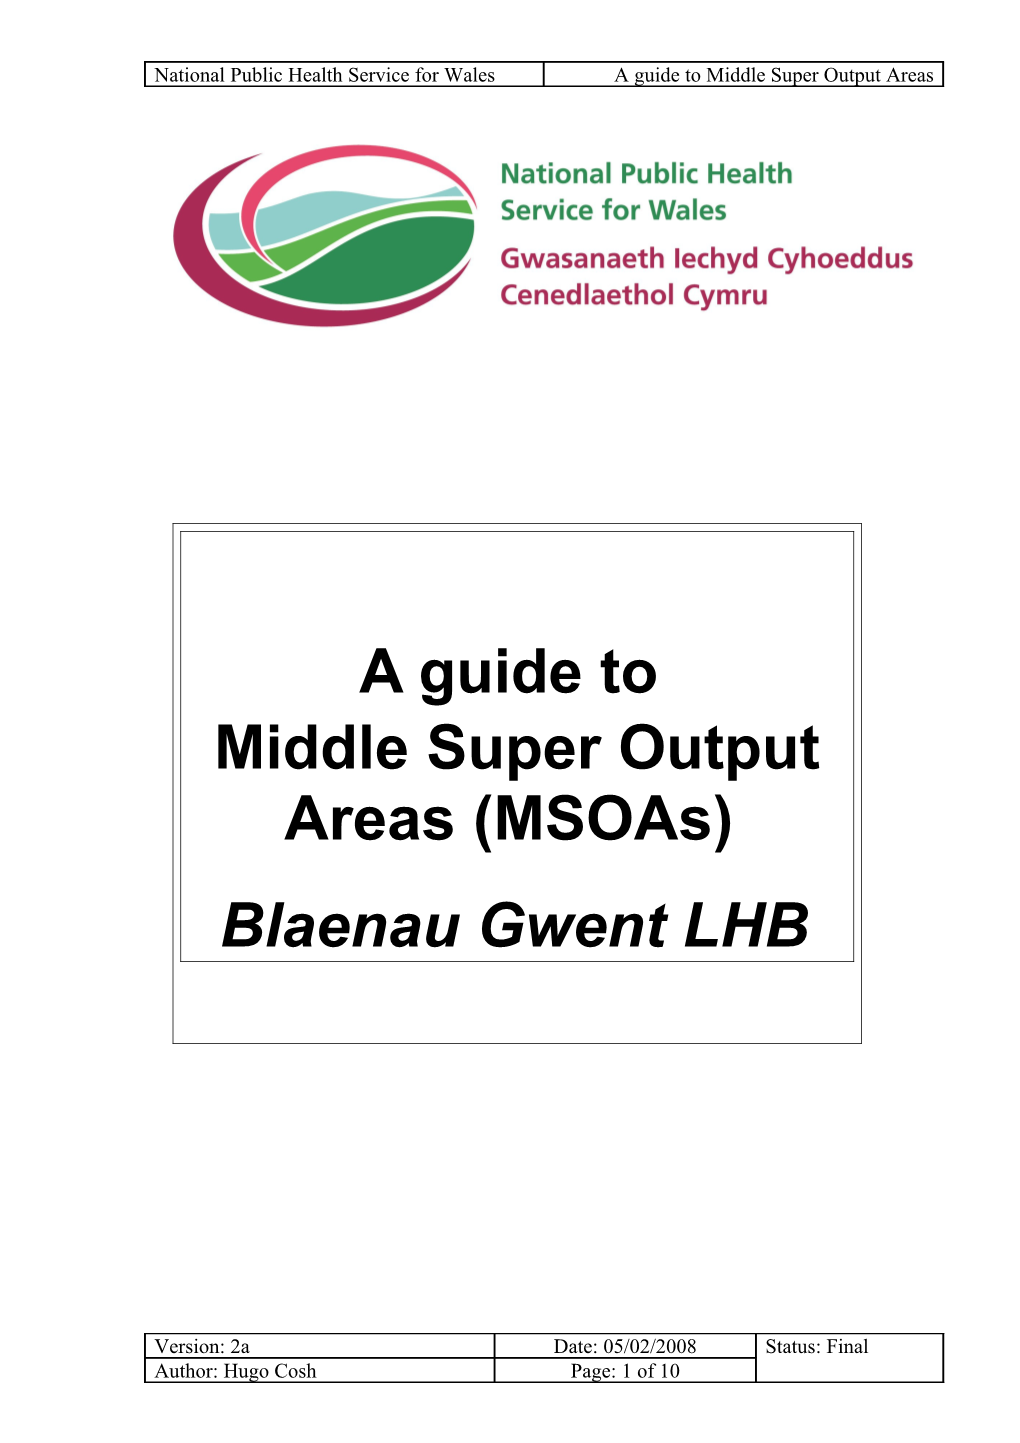 Gwynedd: Electoral Wards and Middle Super Output Areas